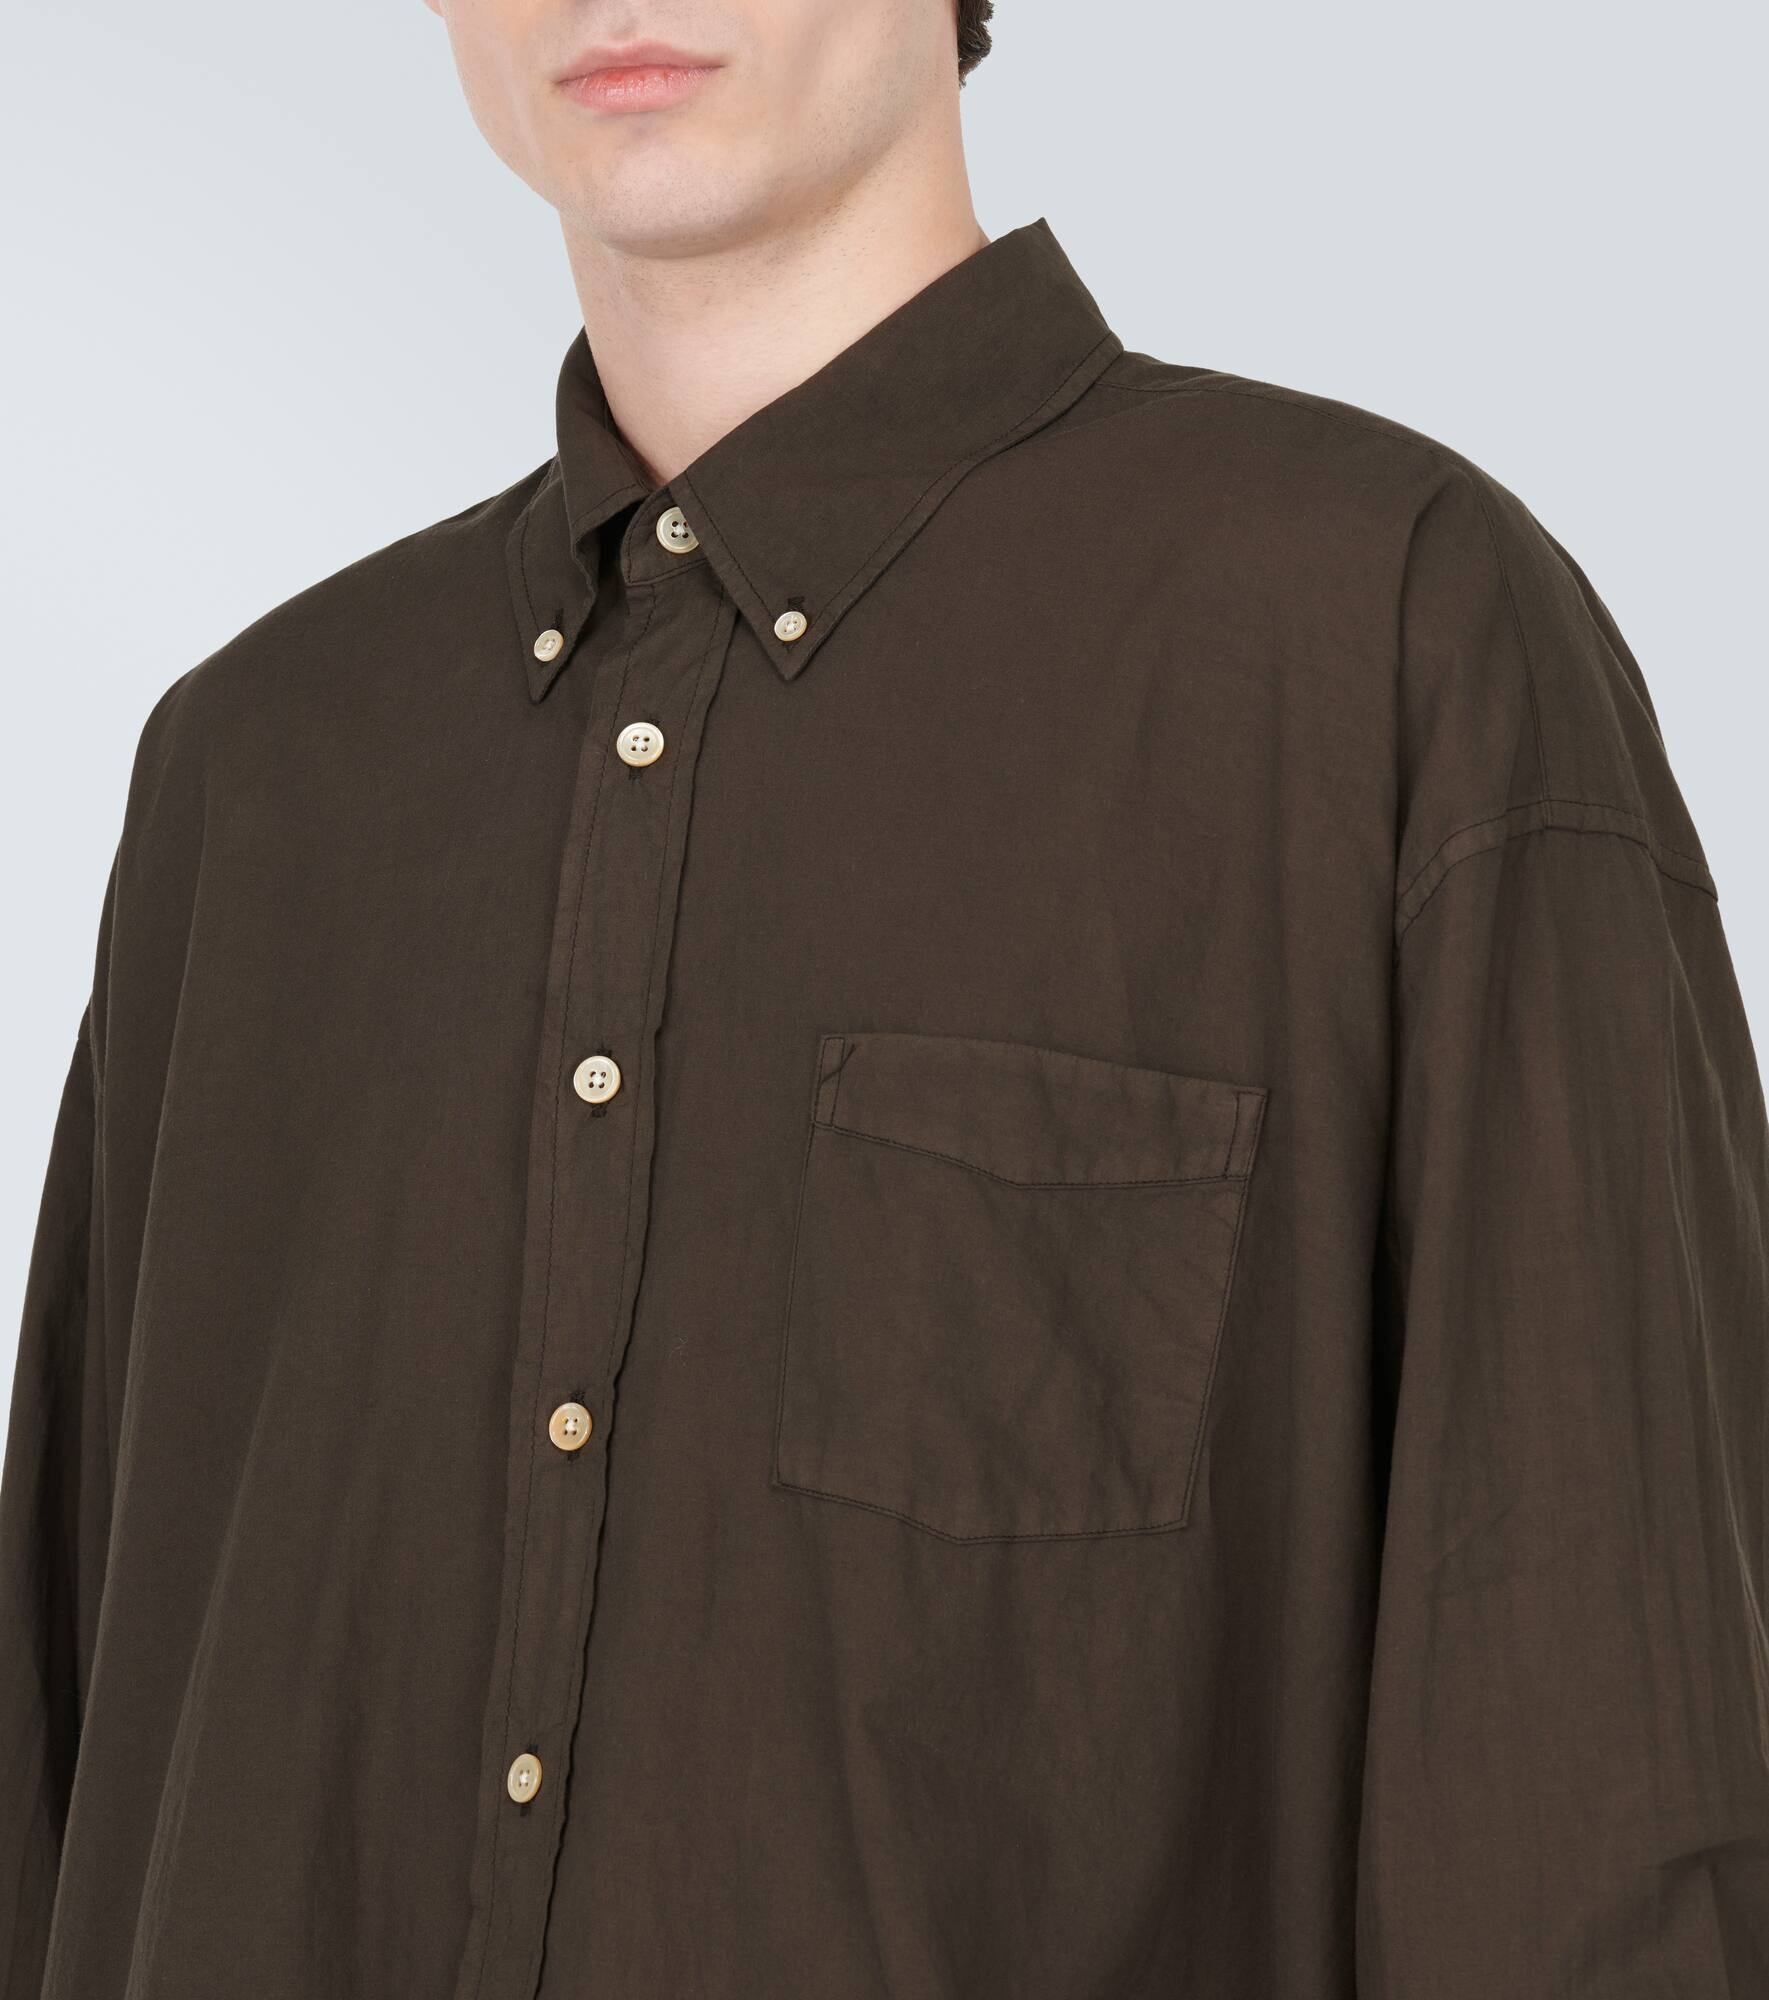 Borrowed cotton voile shirt - 5